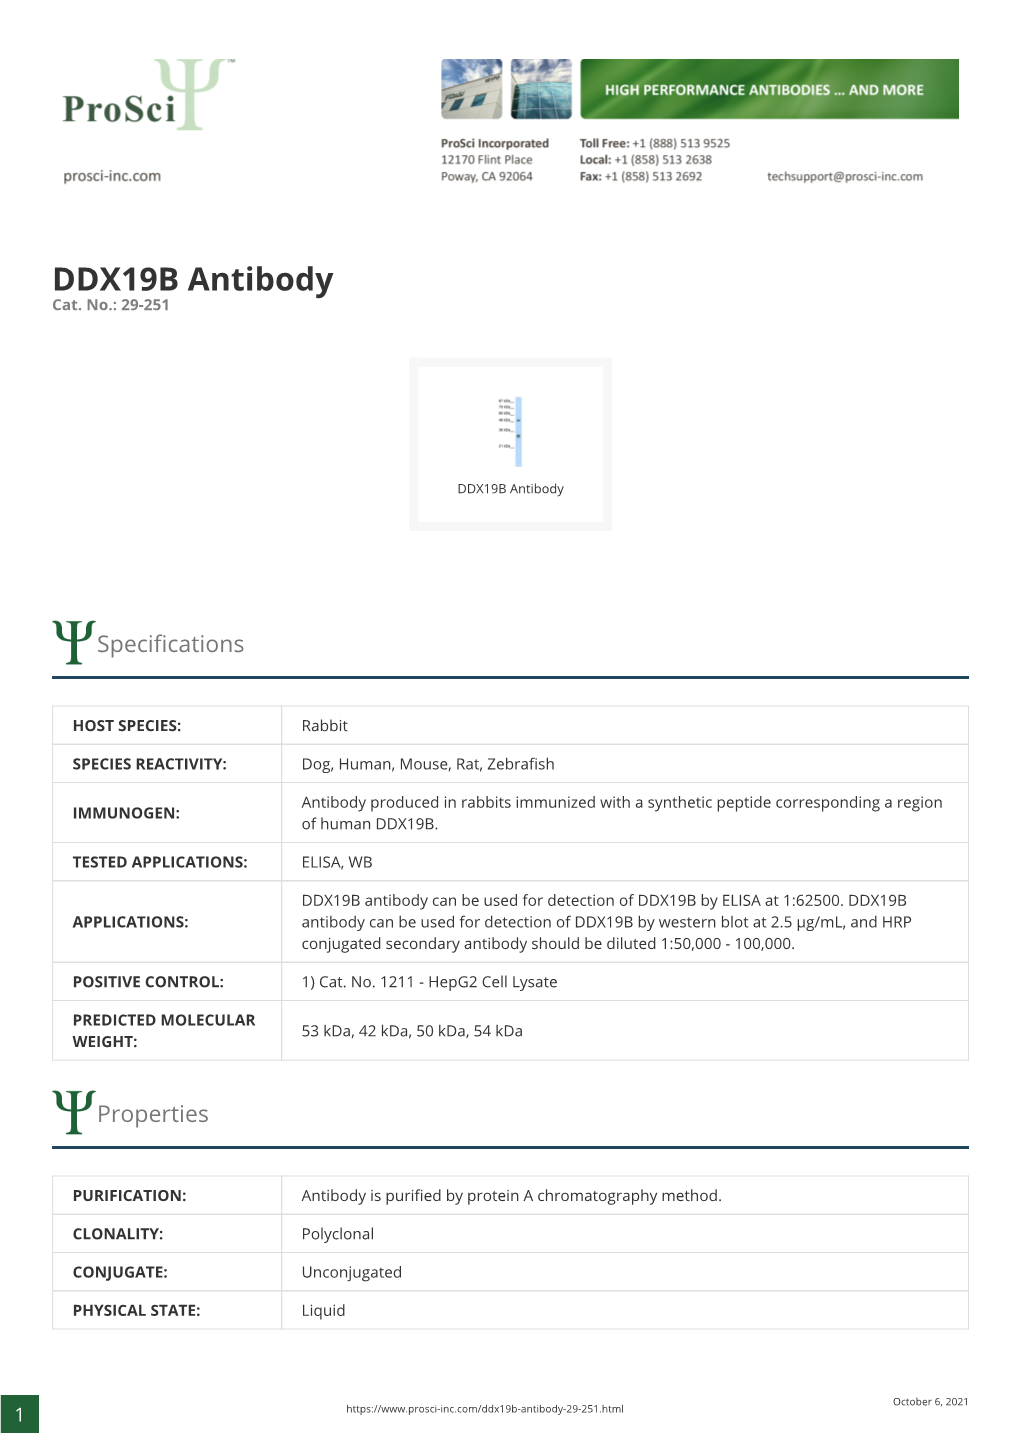 DDX19B Antibody Cat